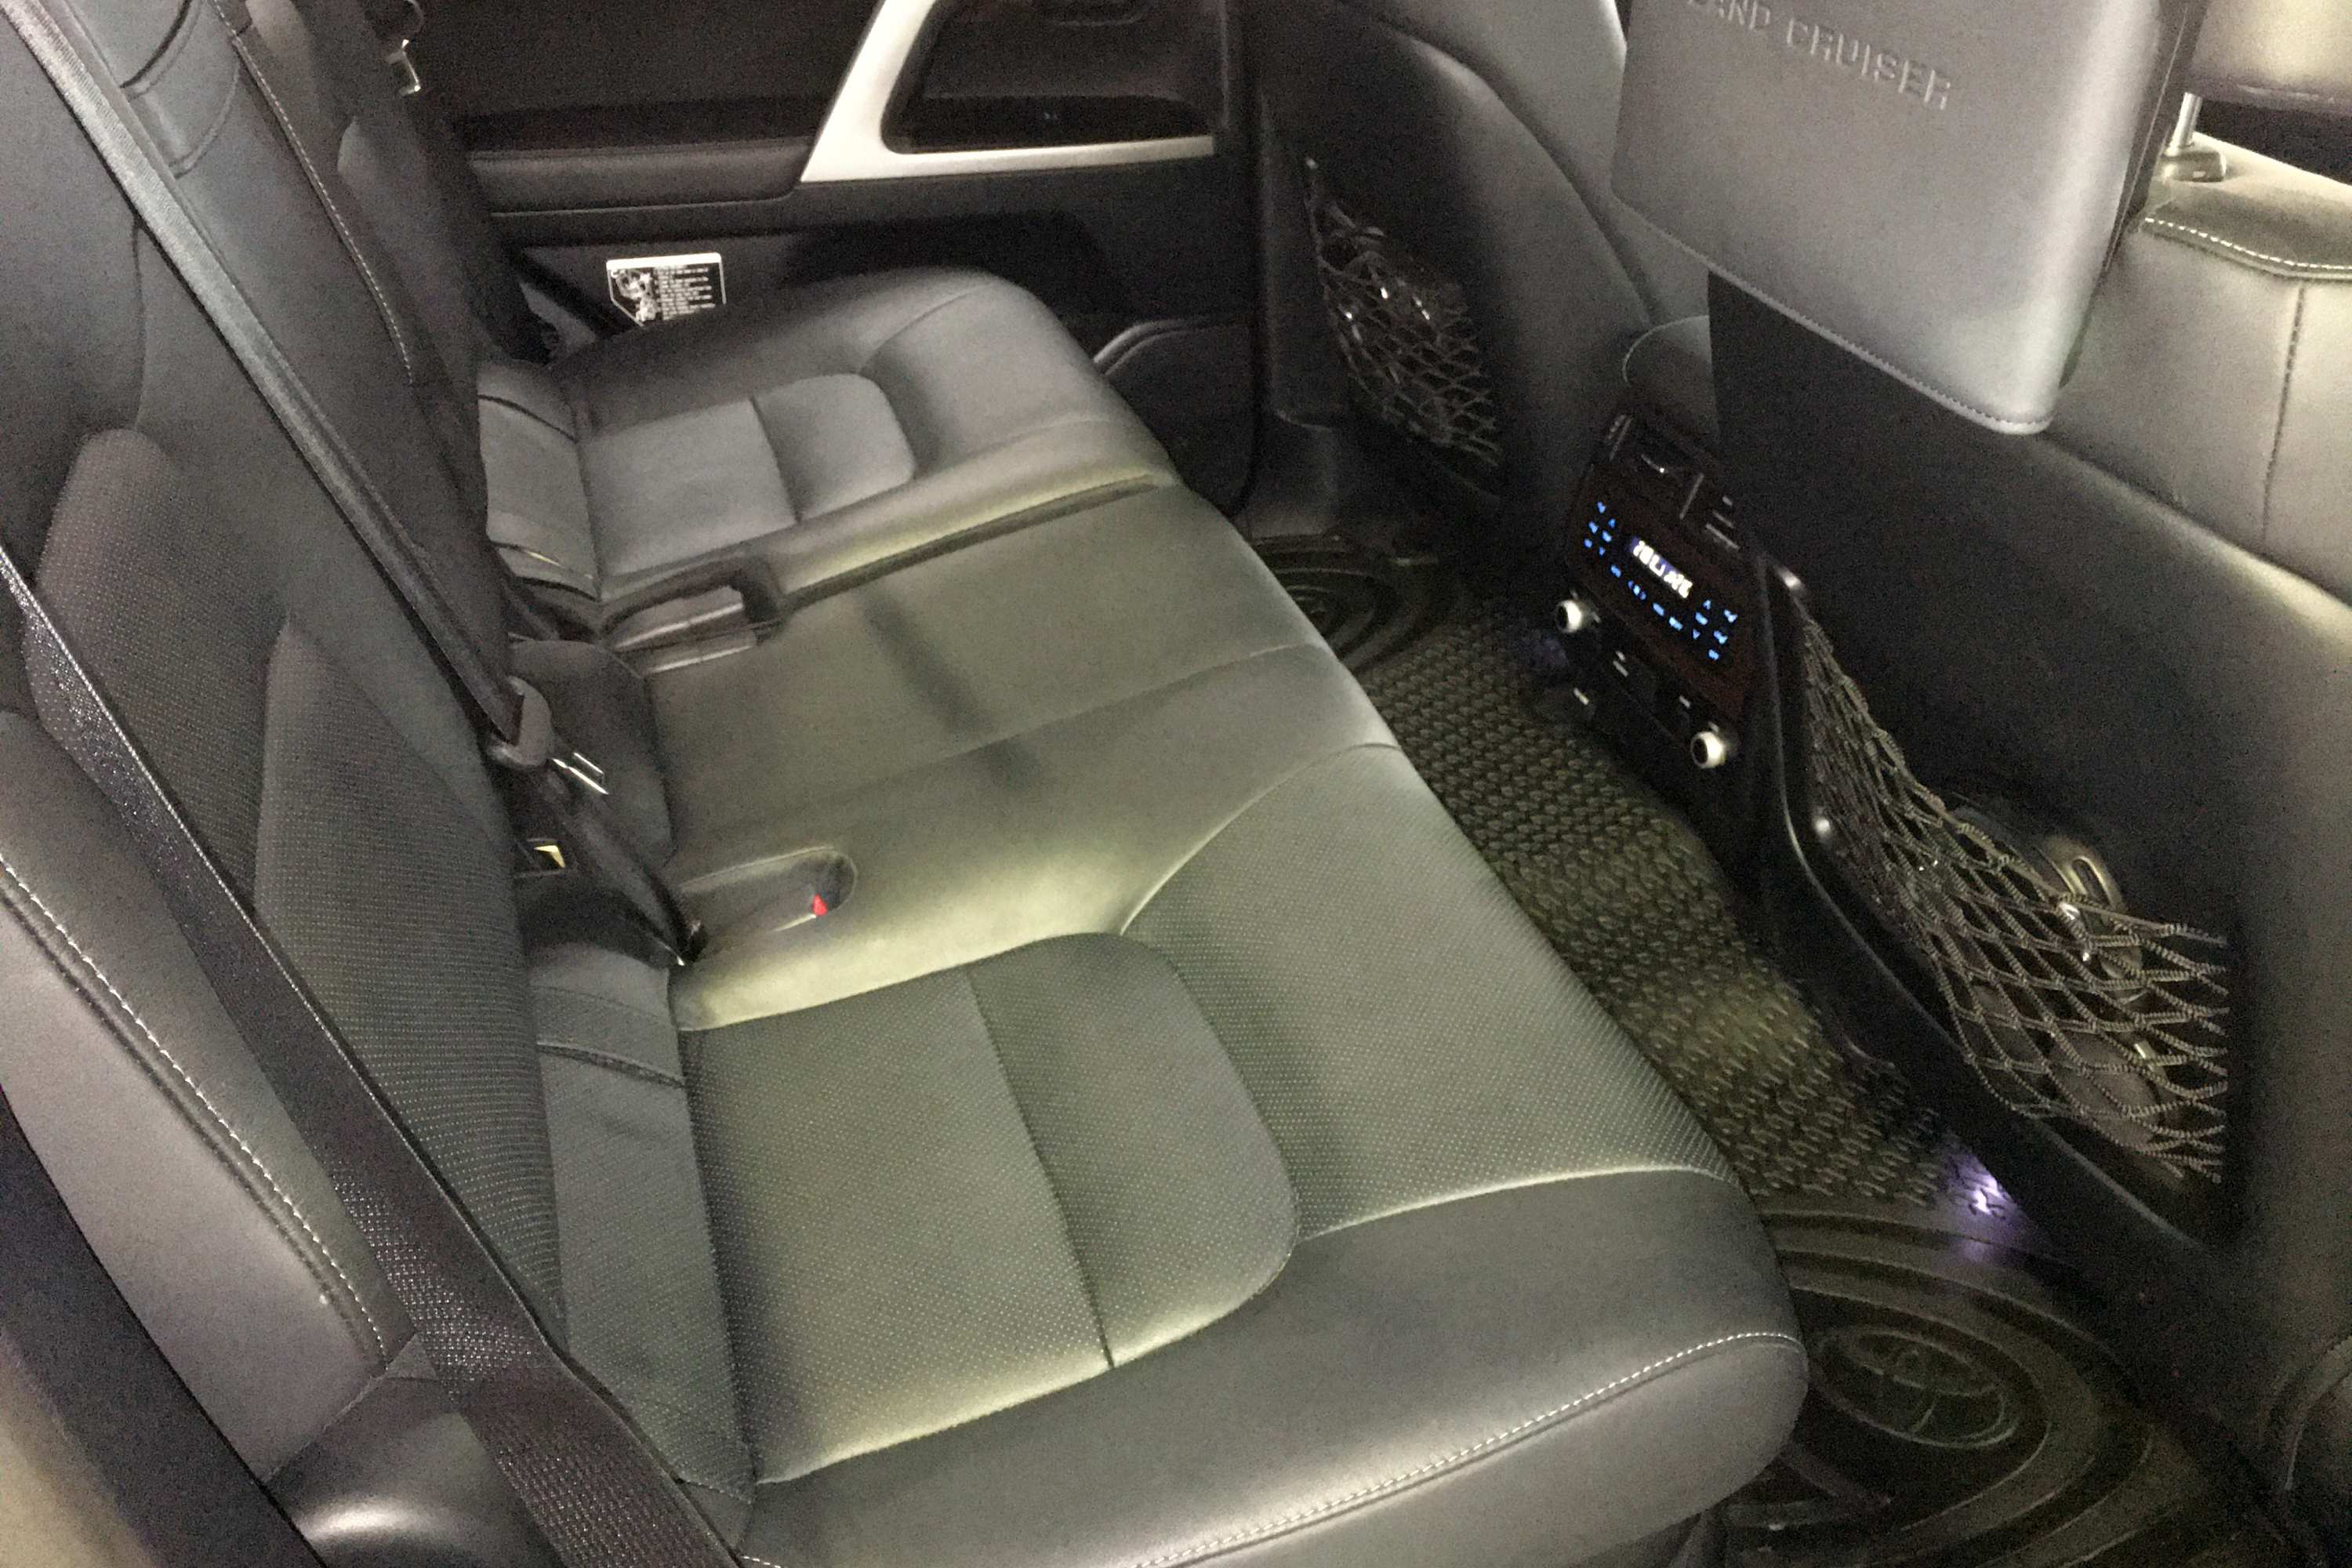 Toyota LandCruiser Sahara 2020 rear seats